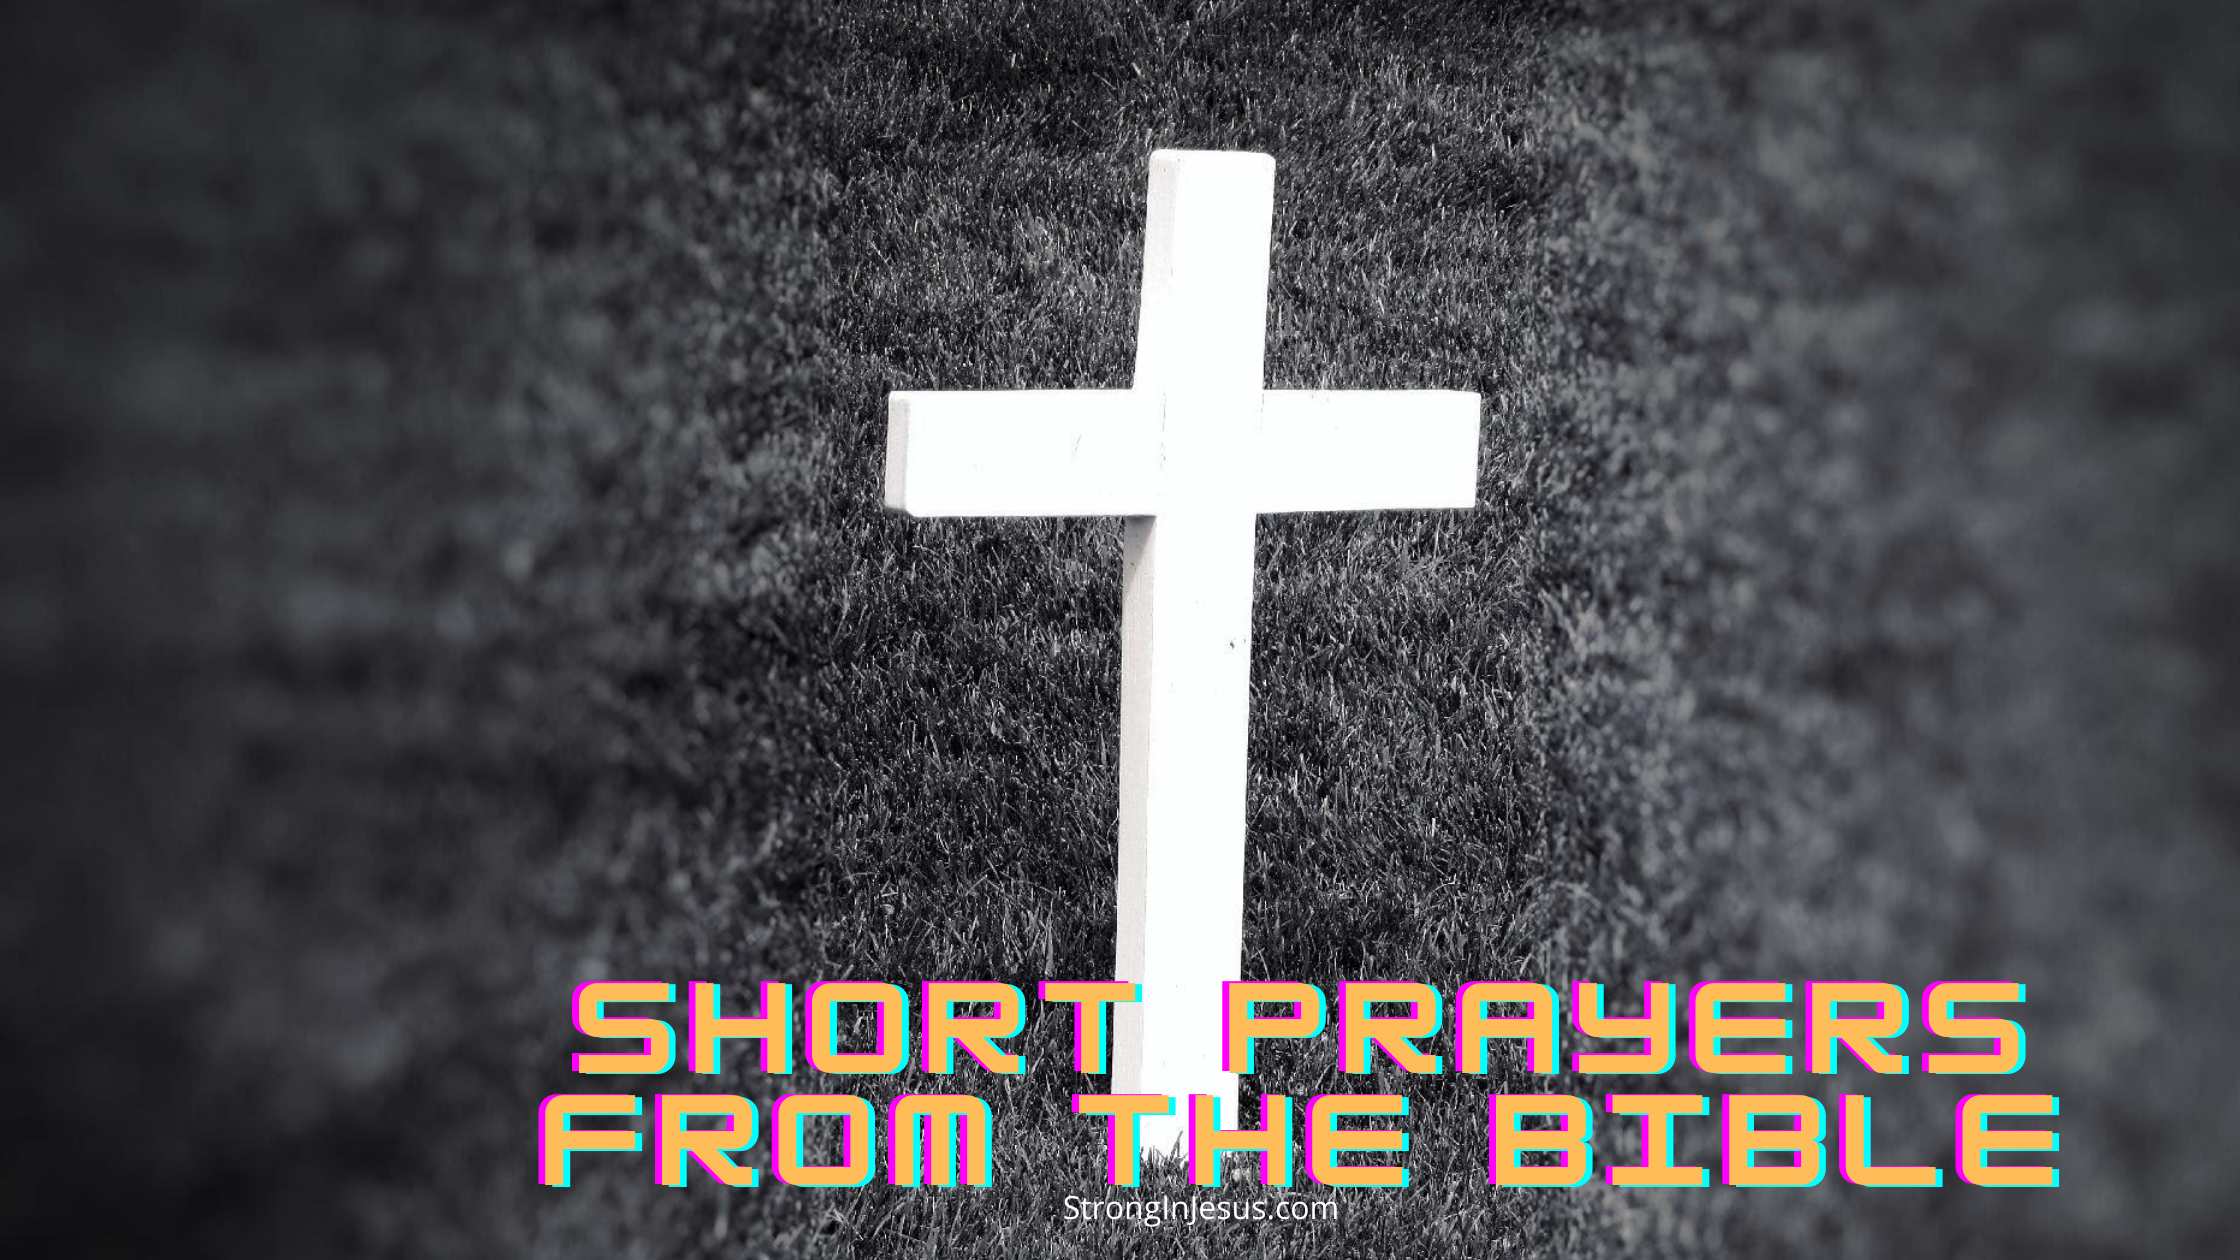 short prayers from bible